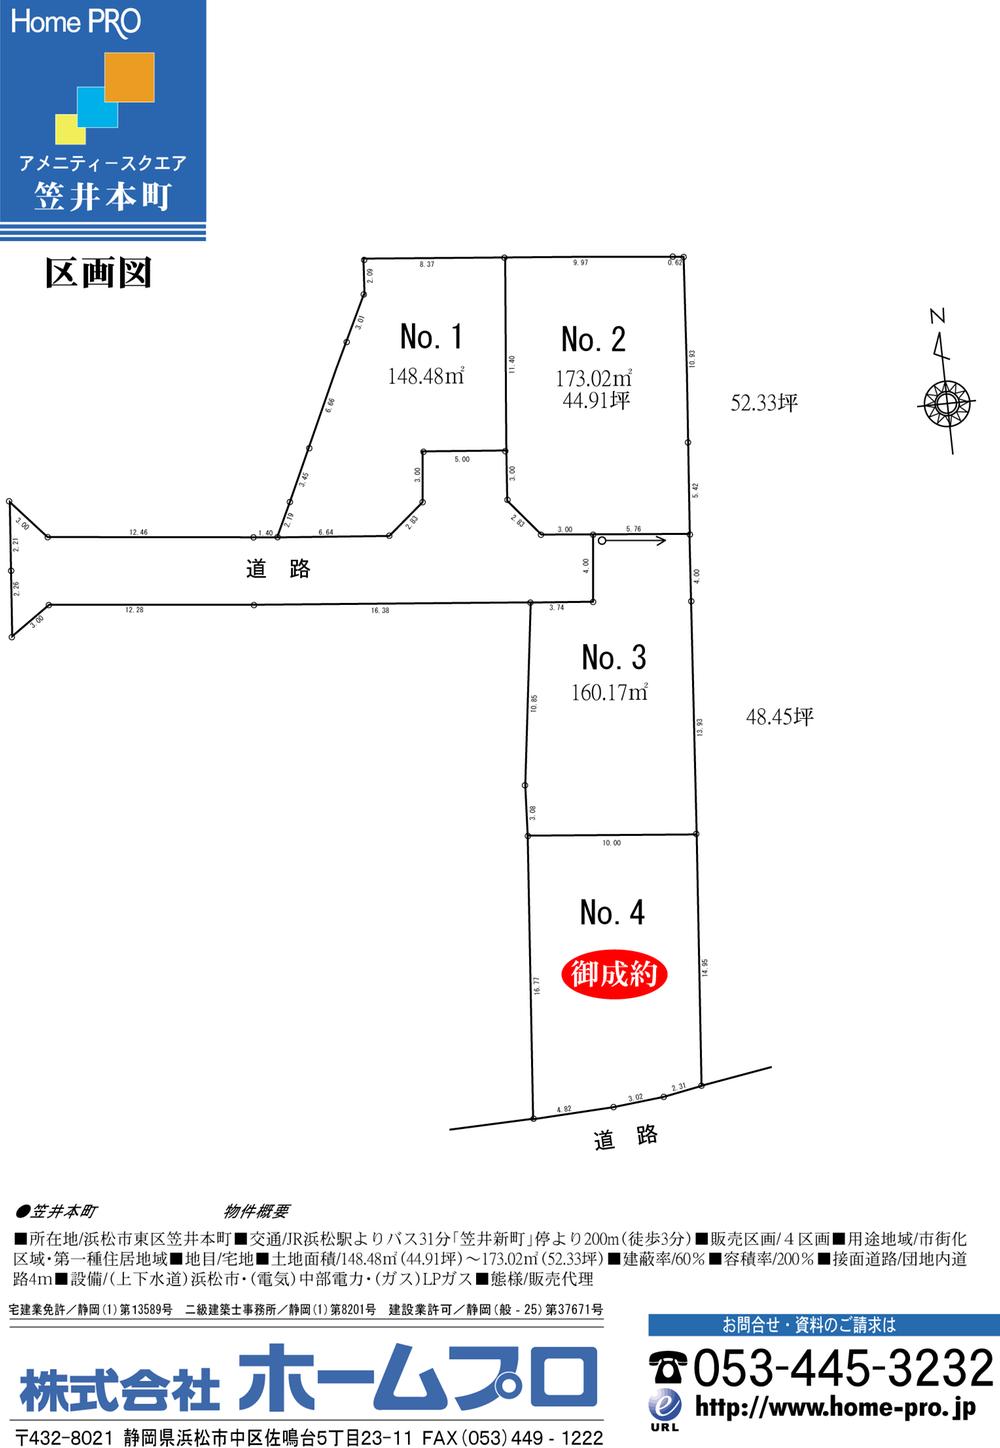 Compartment figure. Land price 11.6 million yen, Land area 173.02 sq m